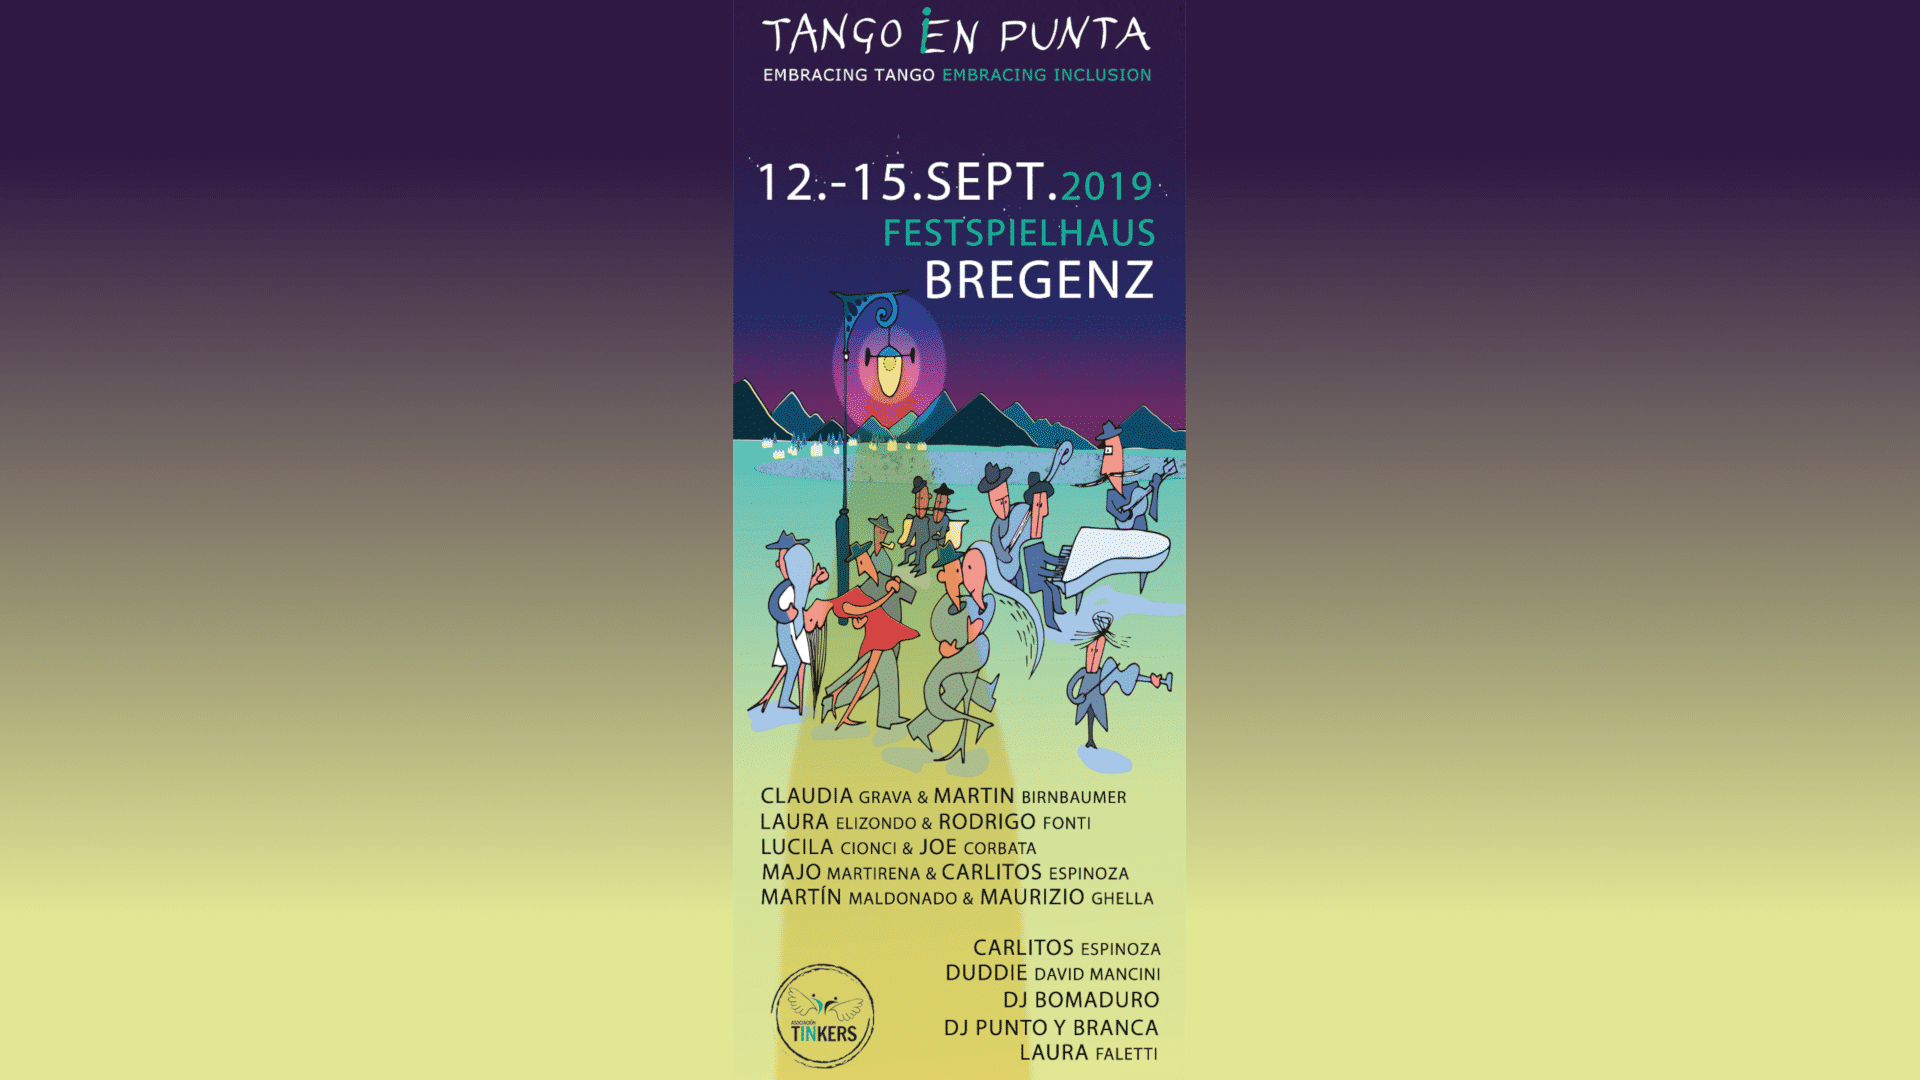 Tango En Punta Bregenz 2019 Preview Image